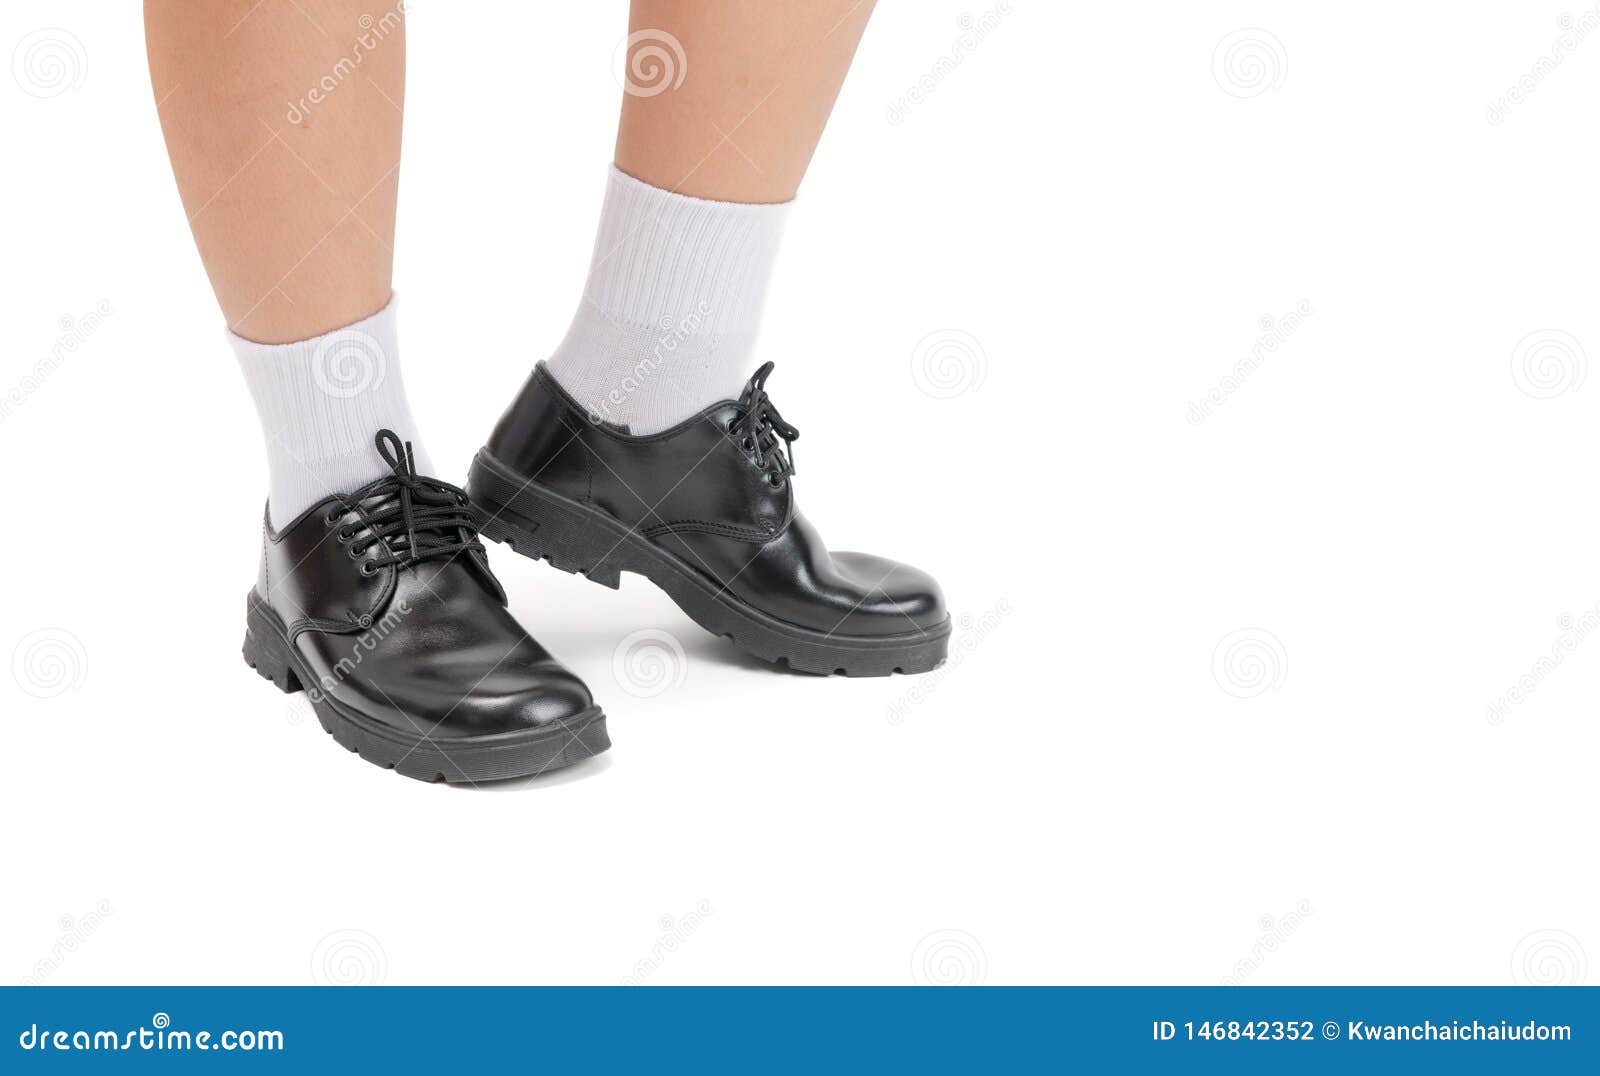 boys secondary school shoes